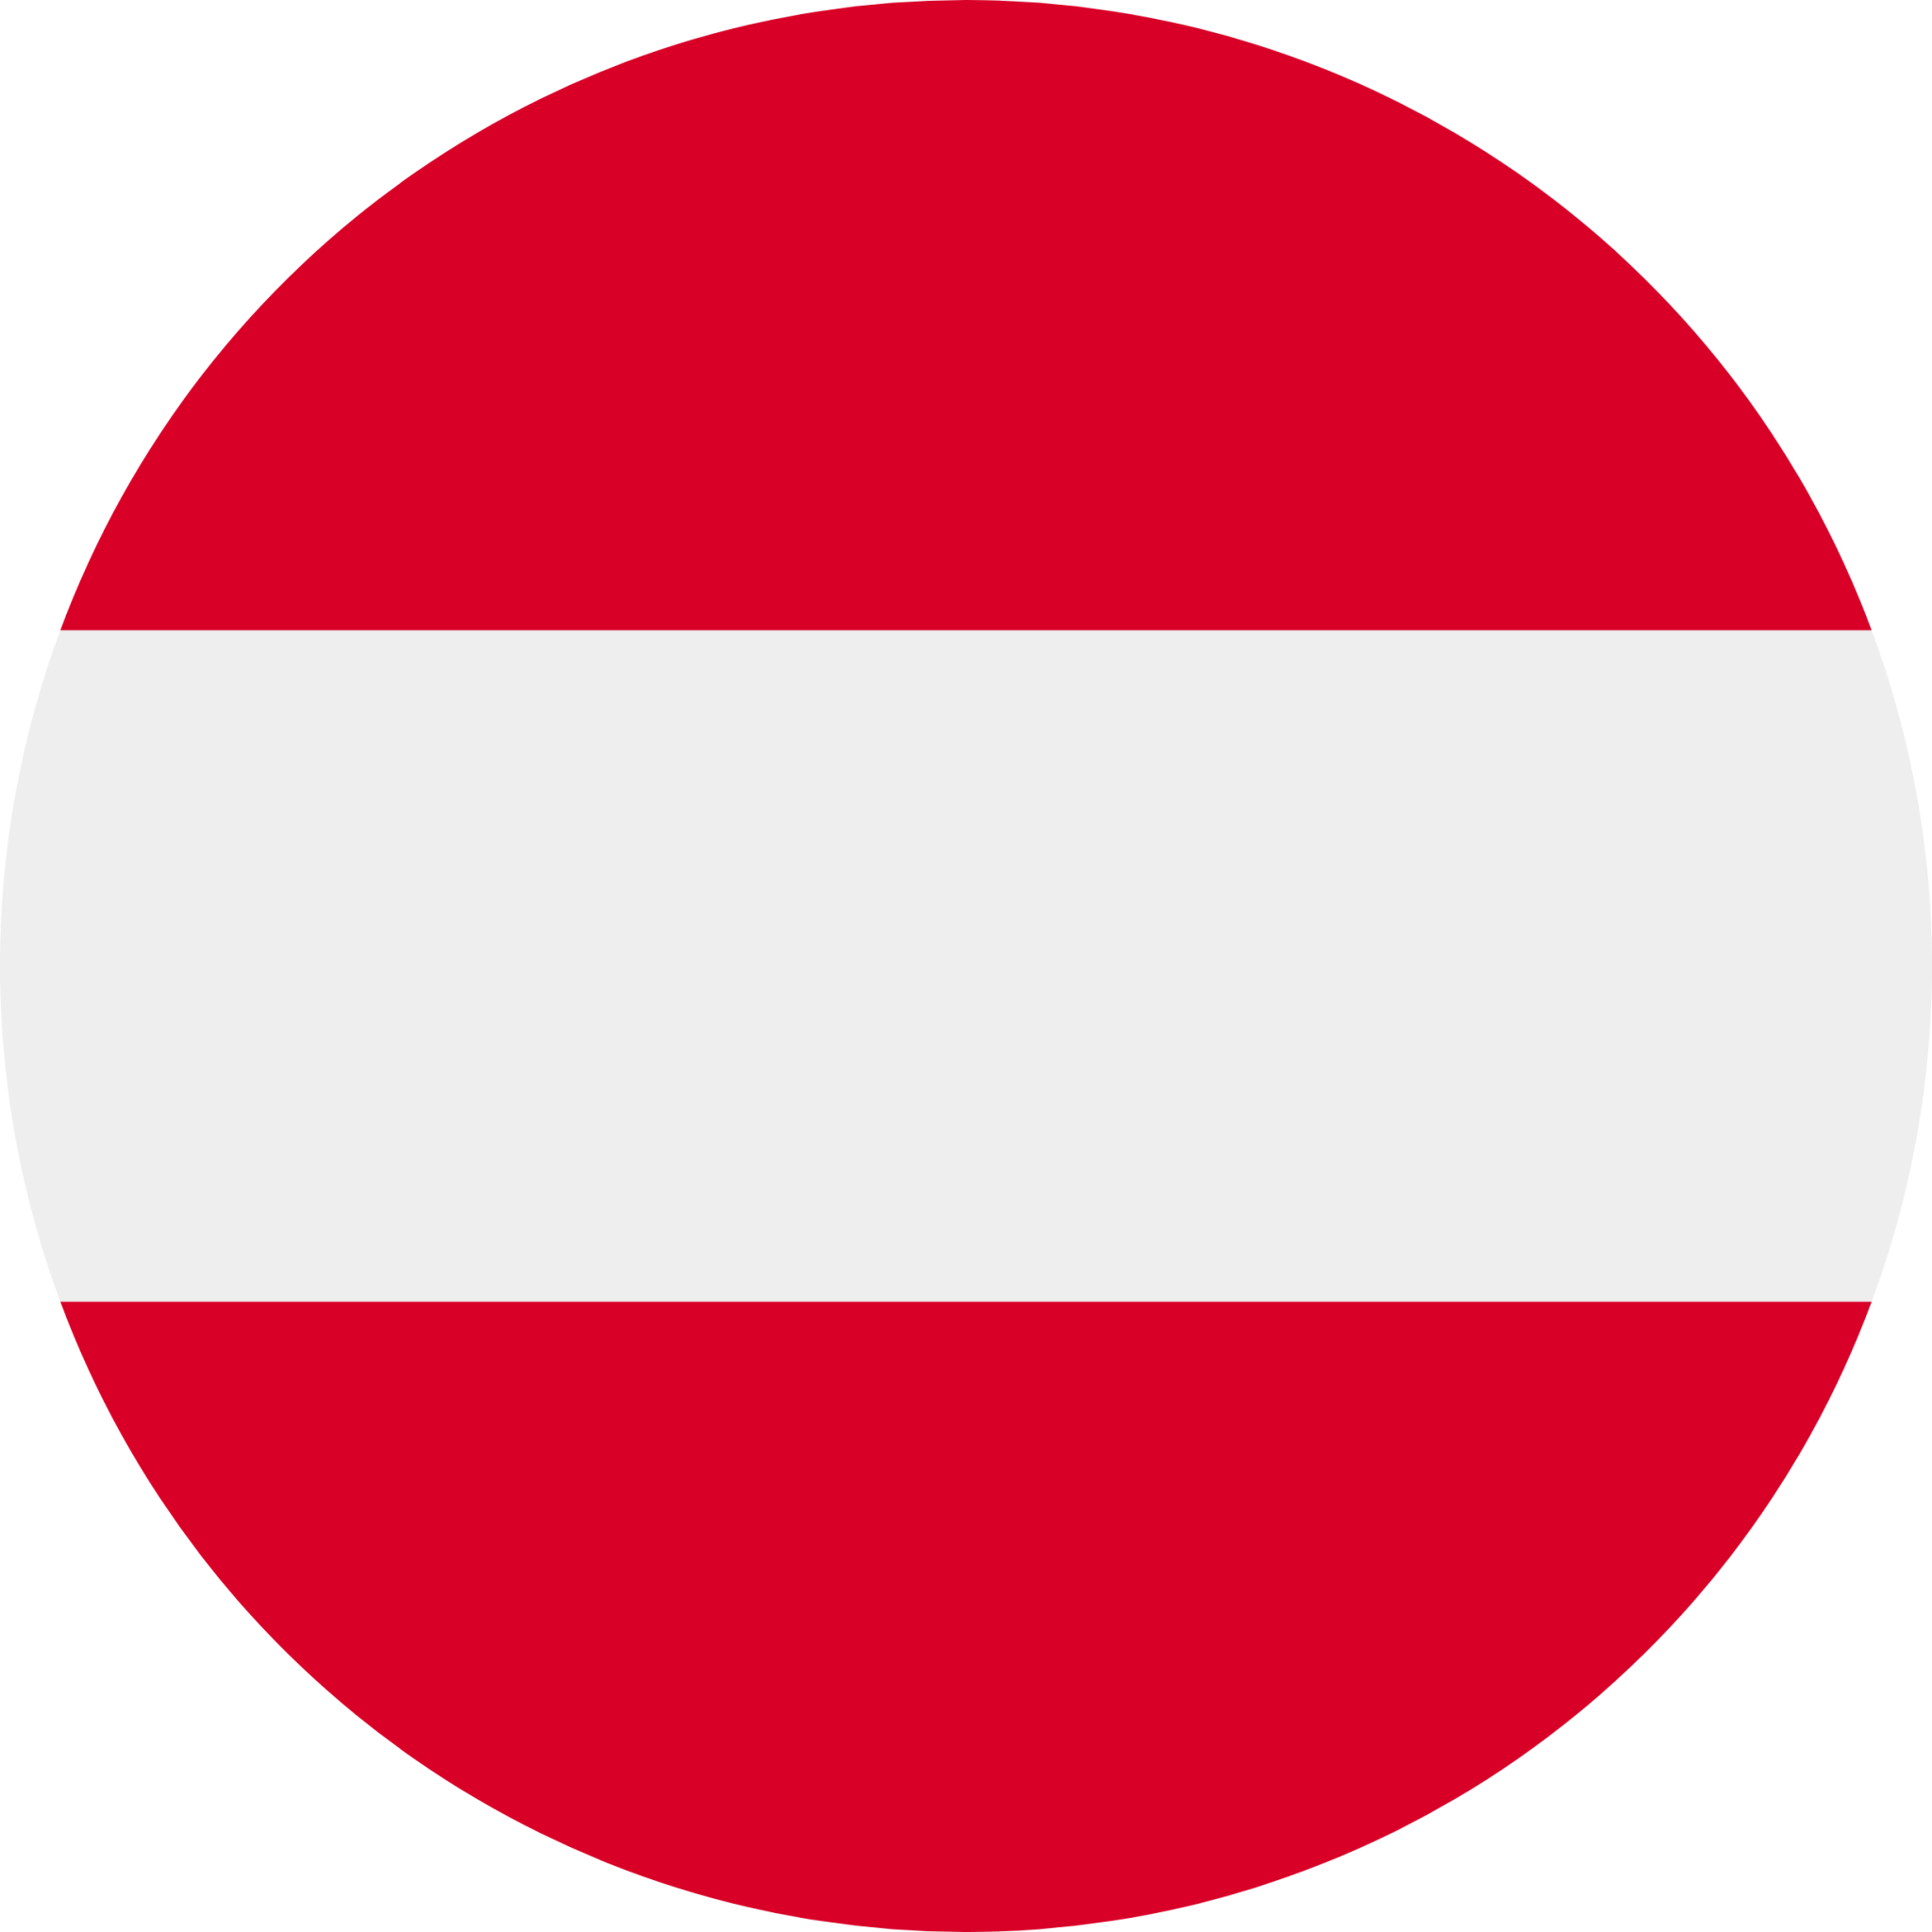 flag at round icon